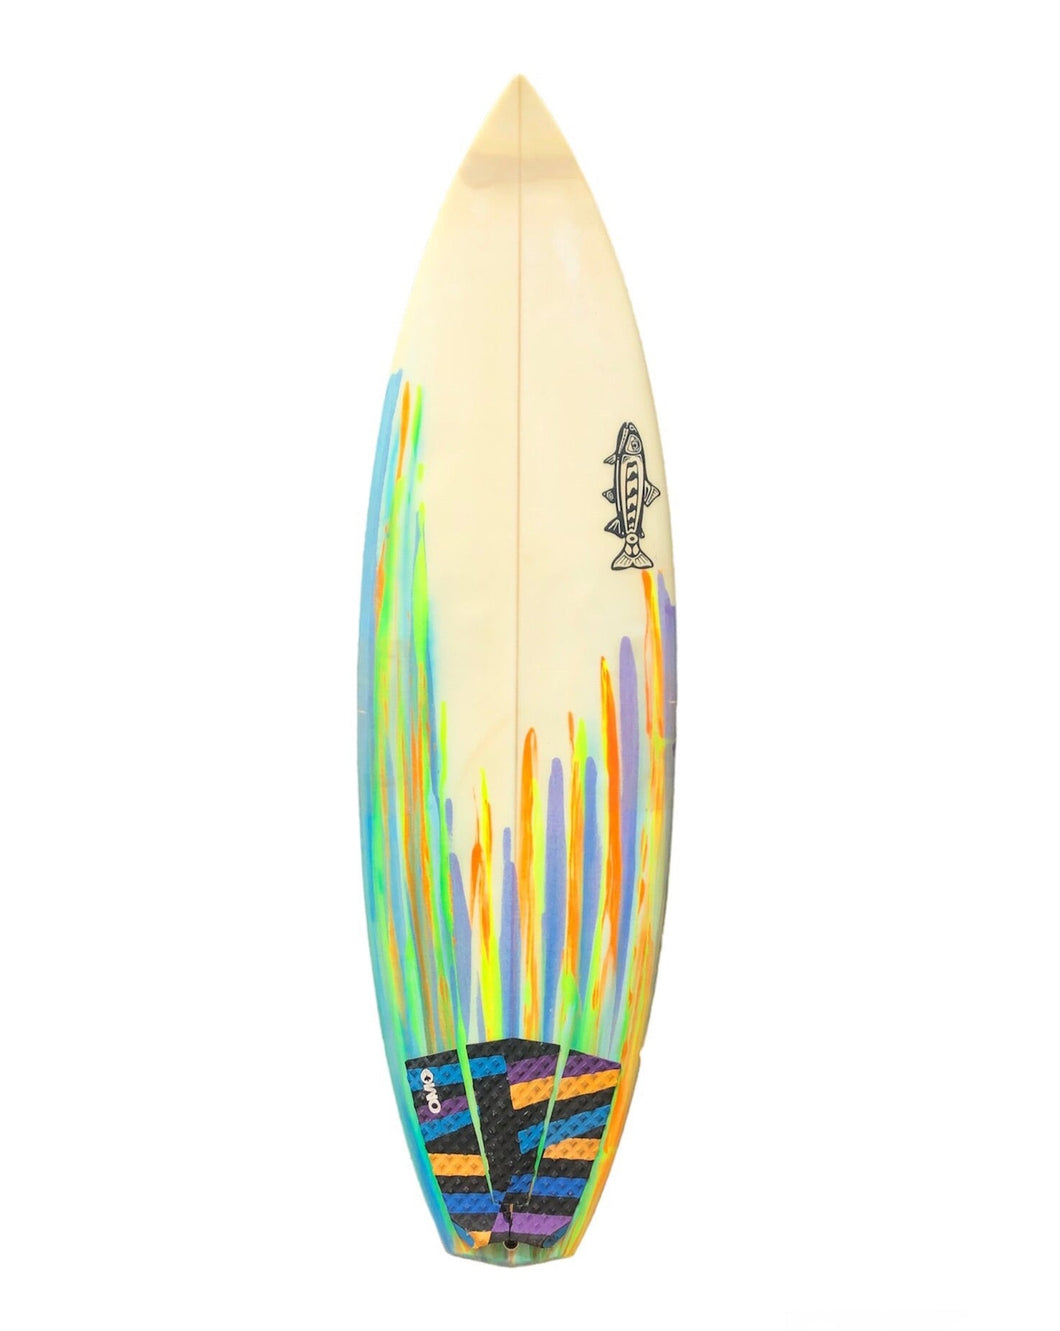 BarryV shortboard surfable